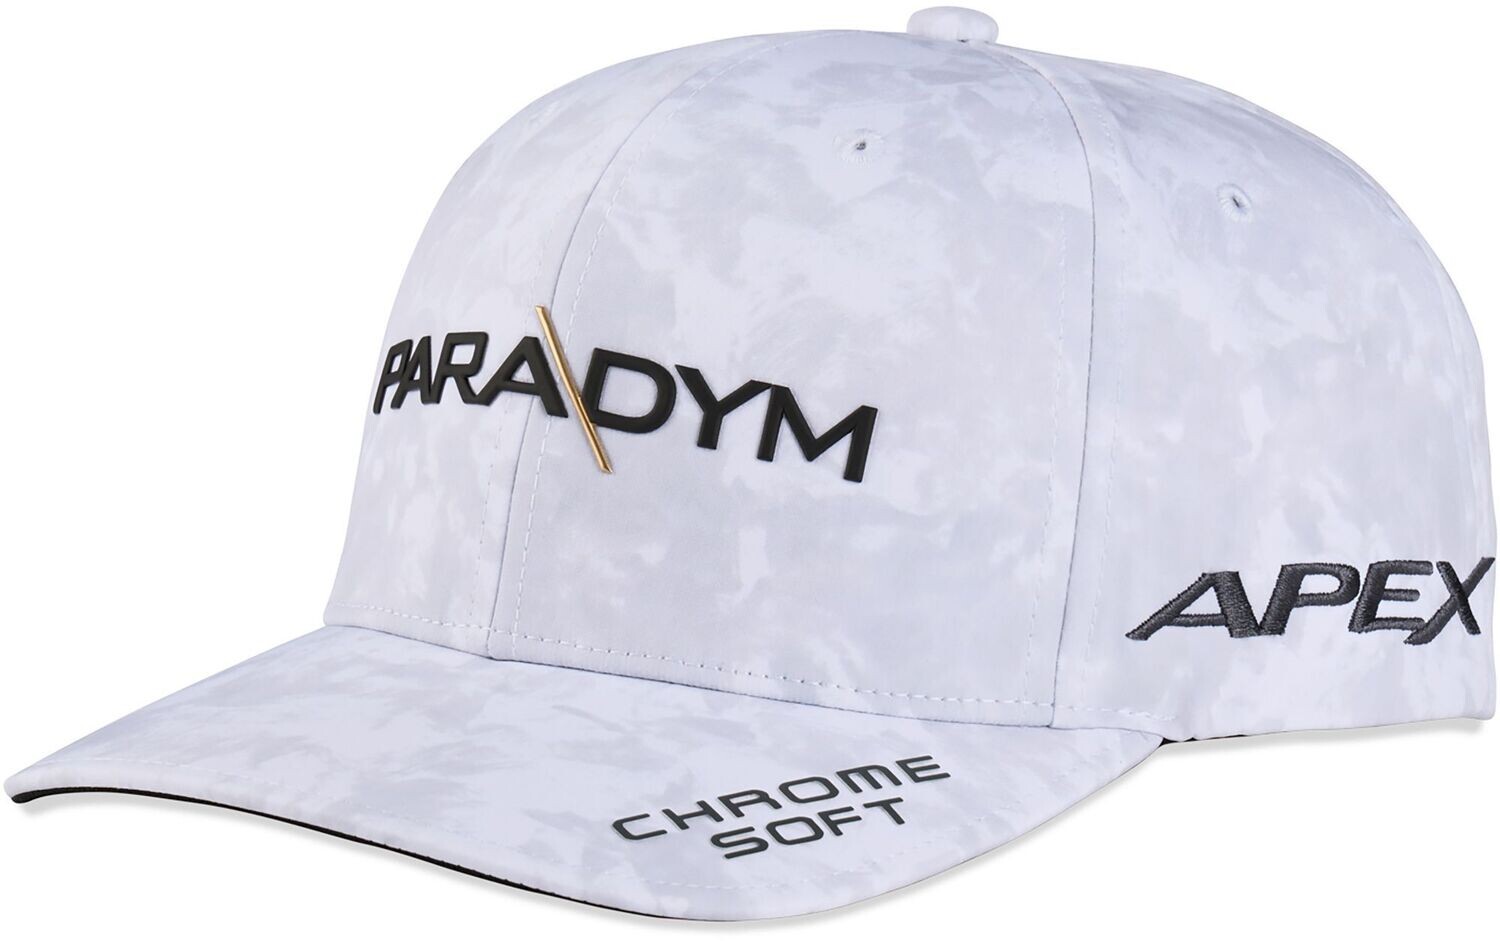 Callaway PARADYM Launch Hat